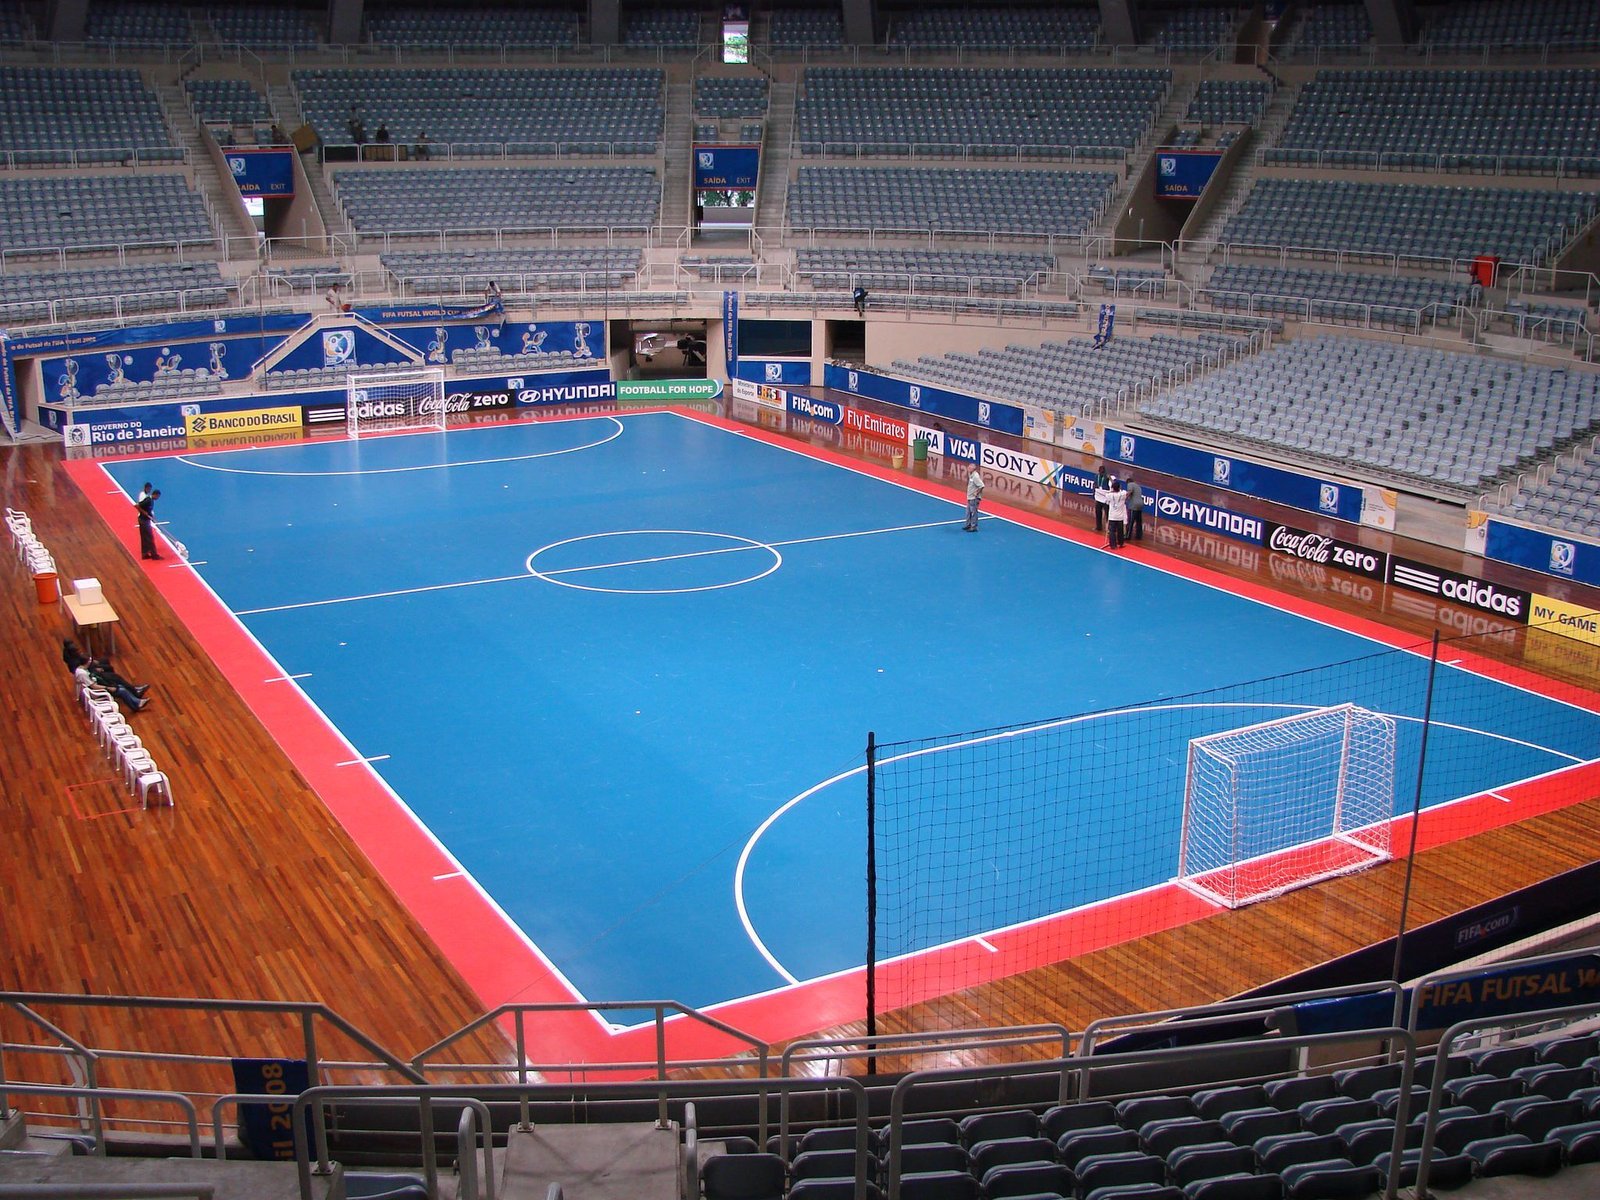 Handball courts